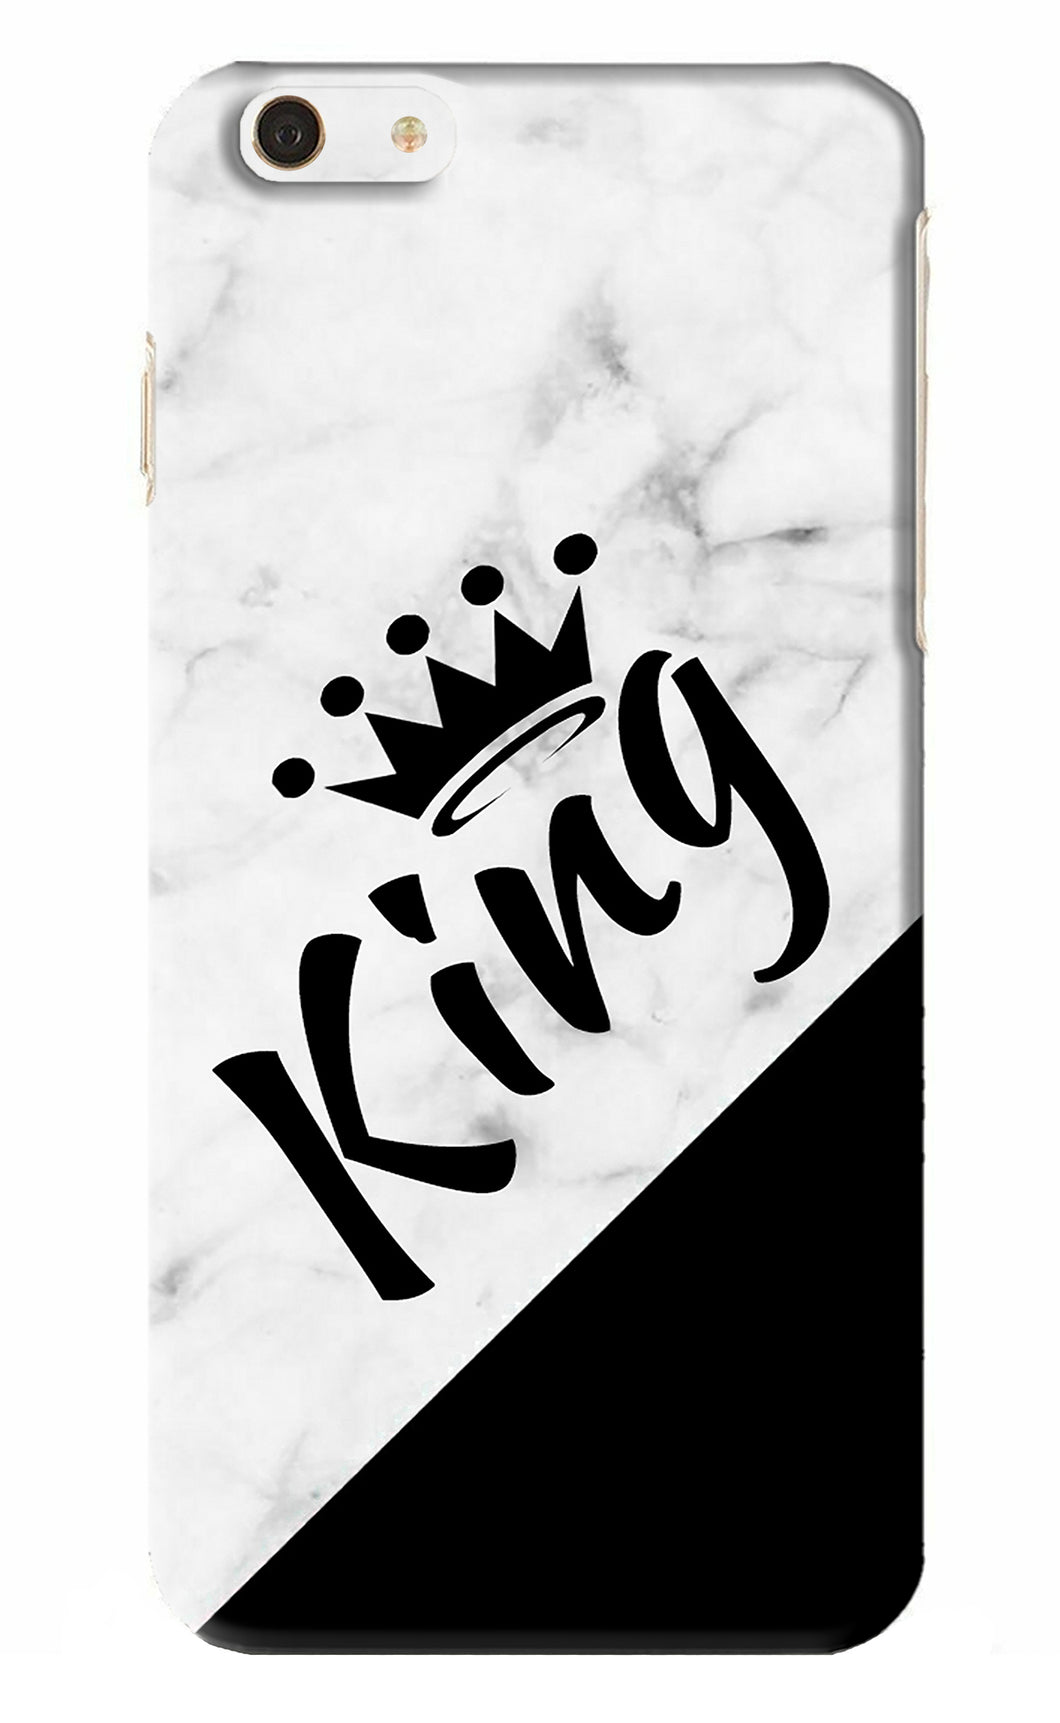 King iPhone 6 Plus Back Skin Wrap